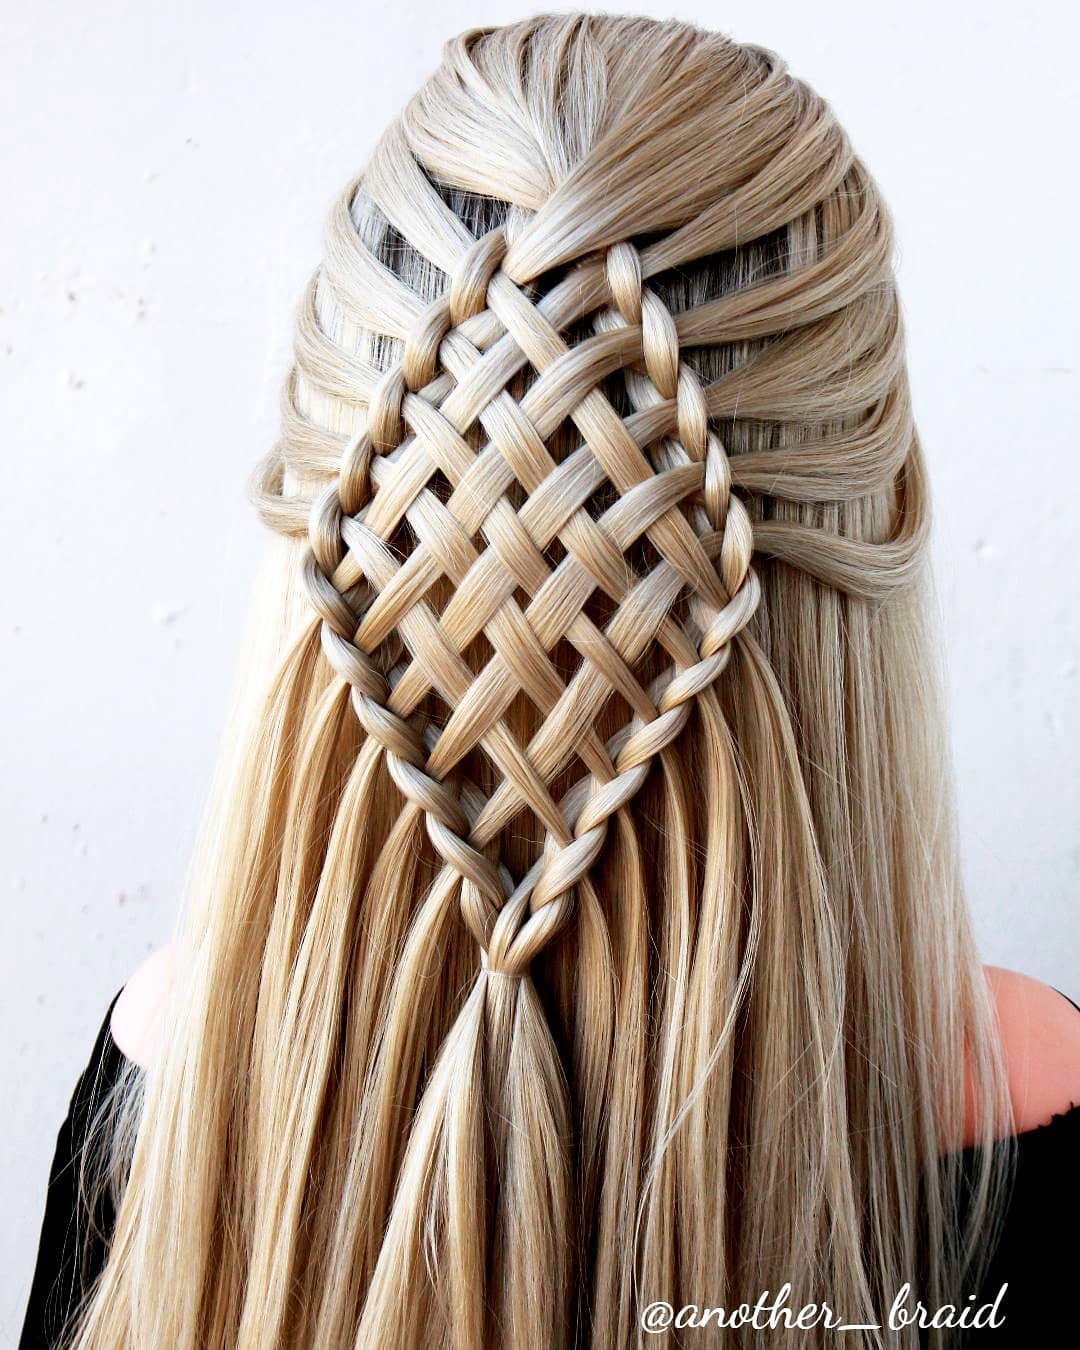 rhomboid patterned braids